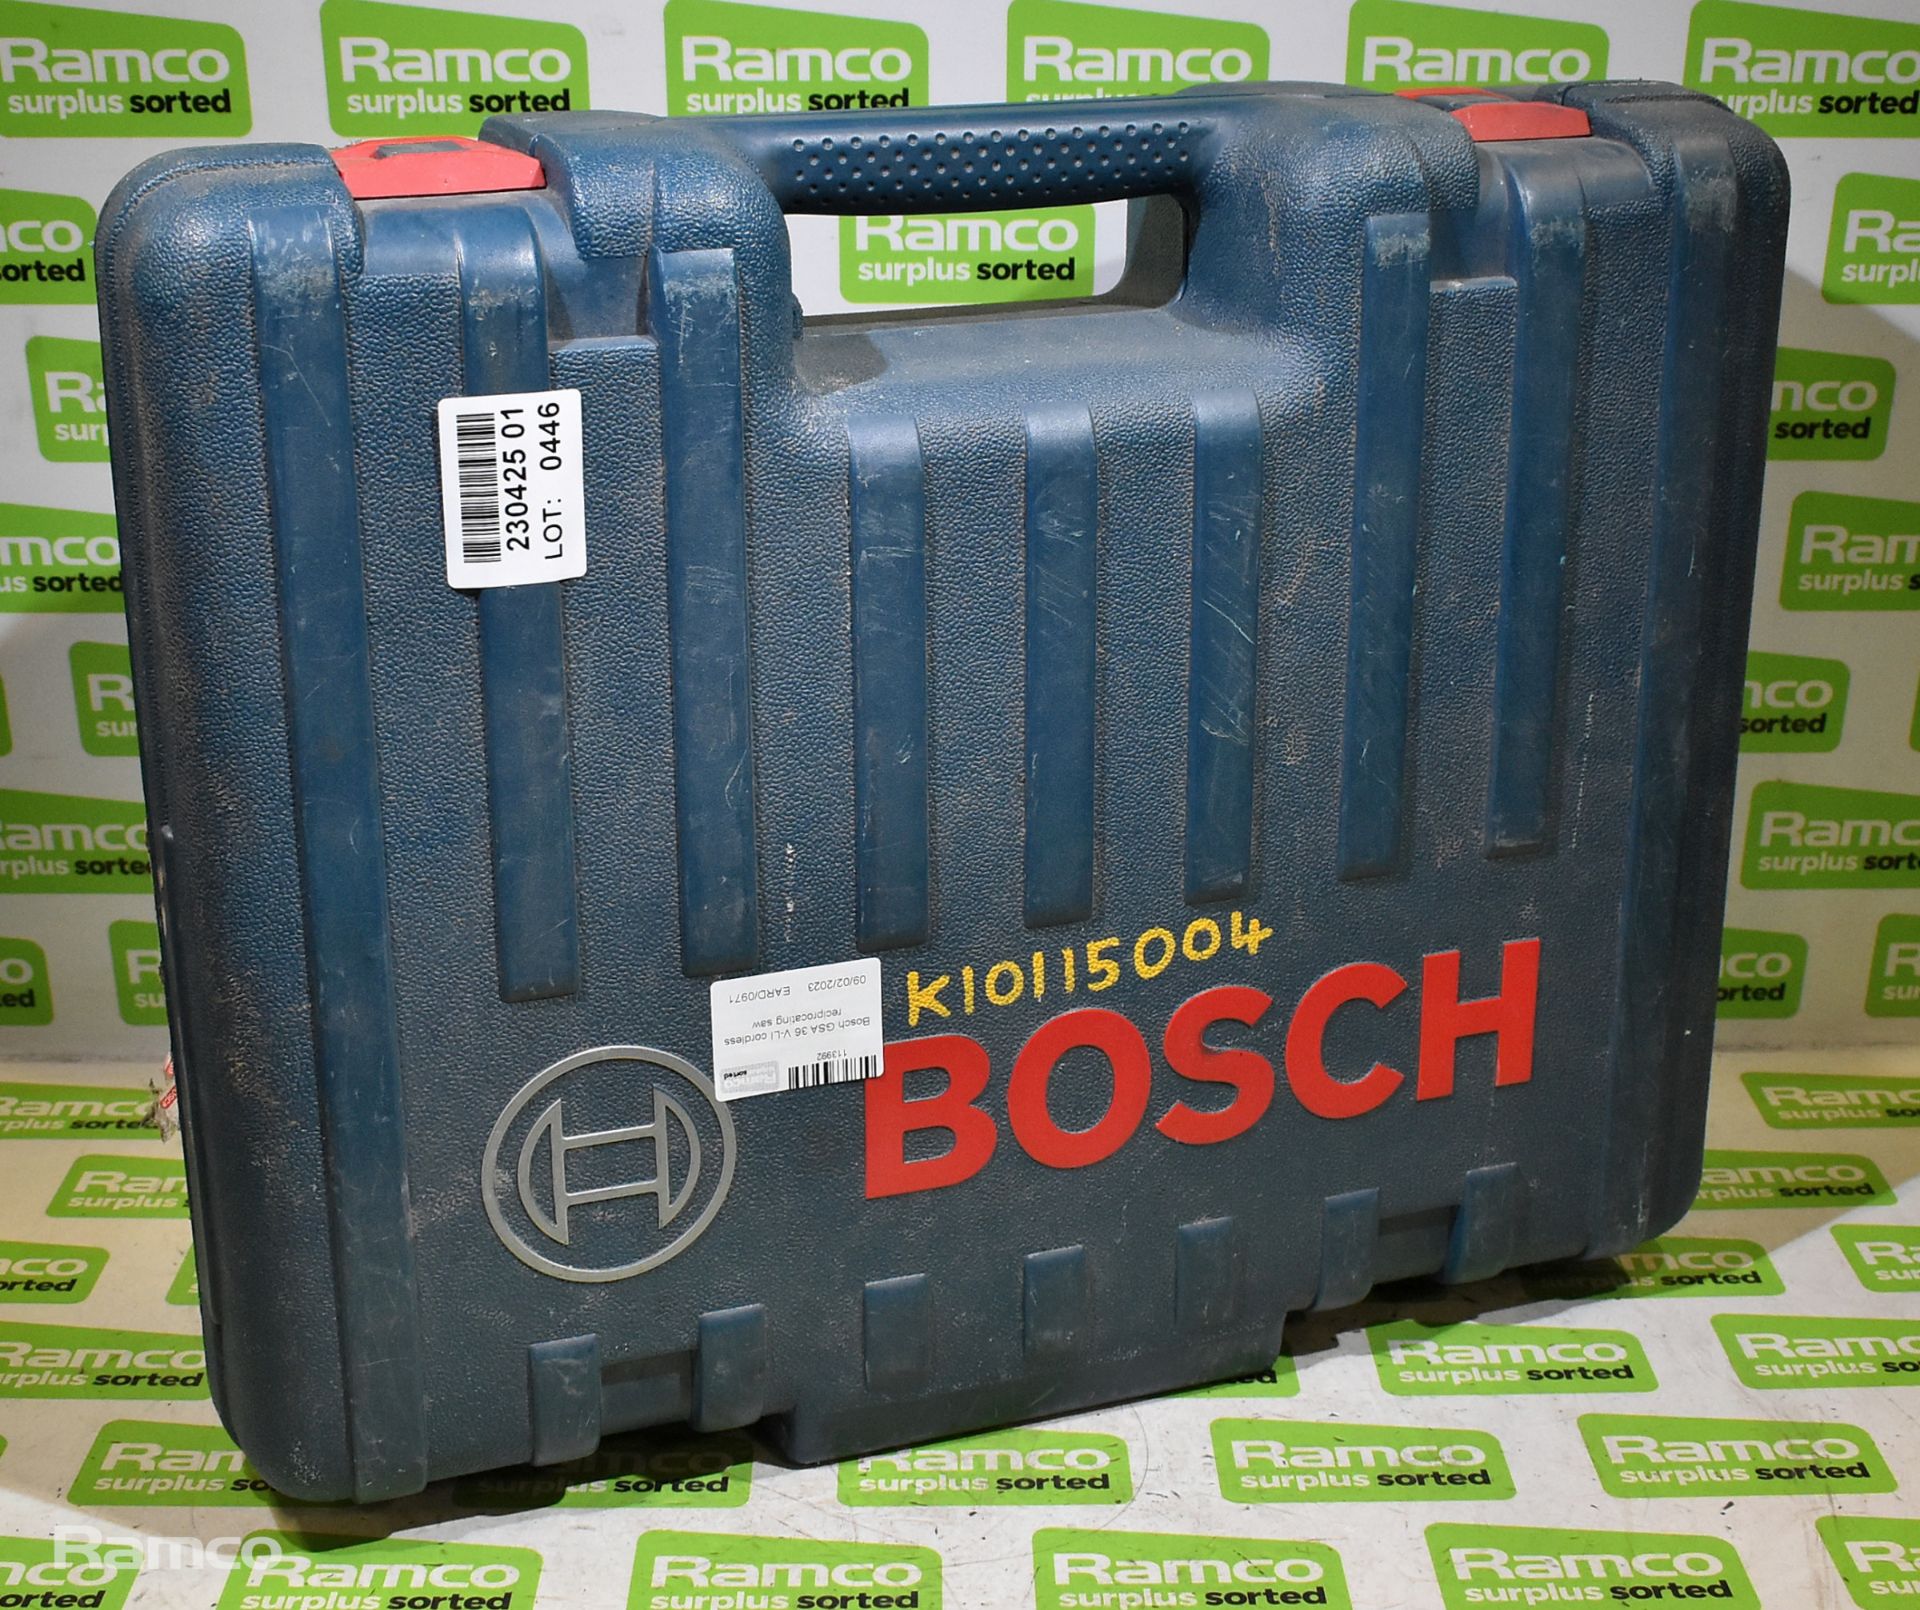 Bosch GSA 36 V-LI cordless reciprocating saw - Image 6 of 6